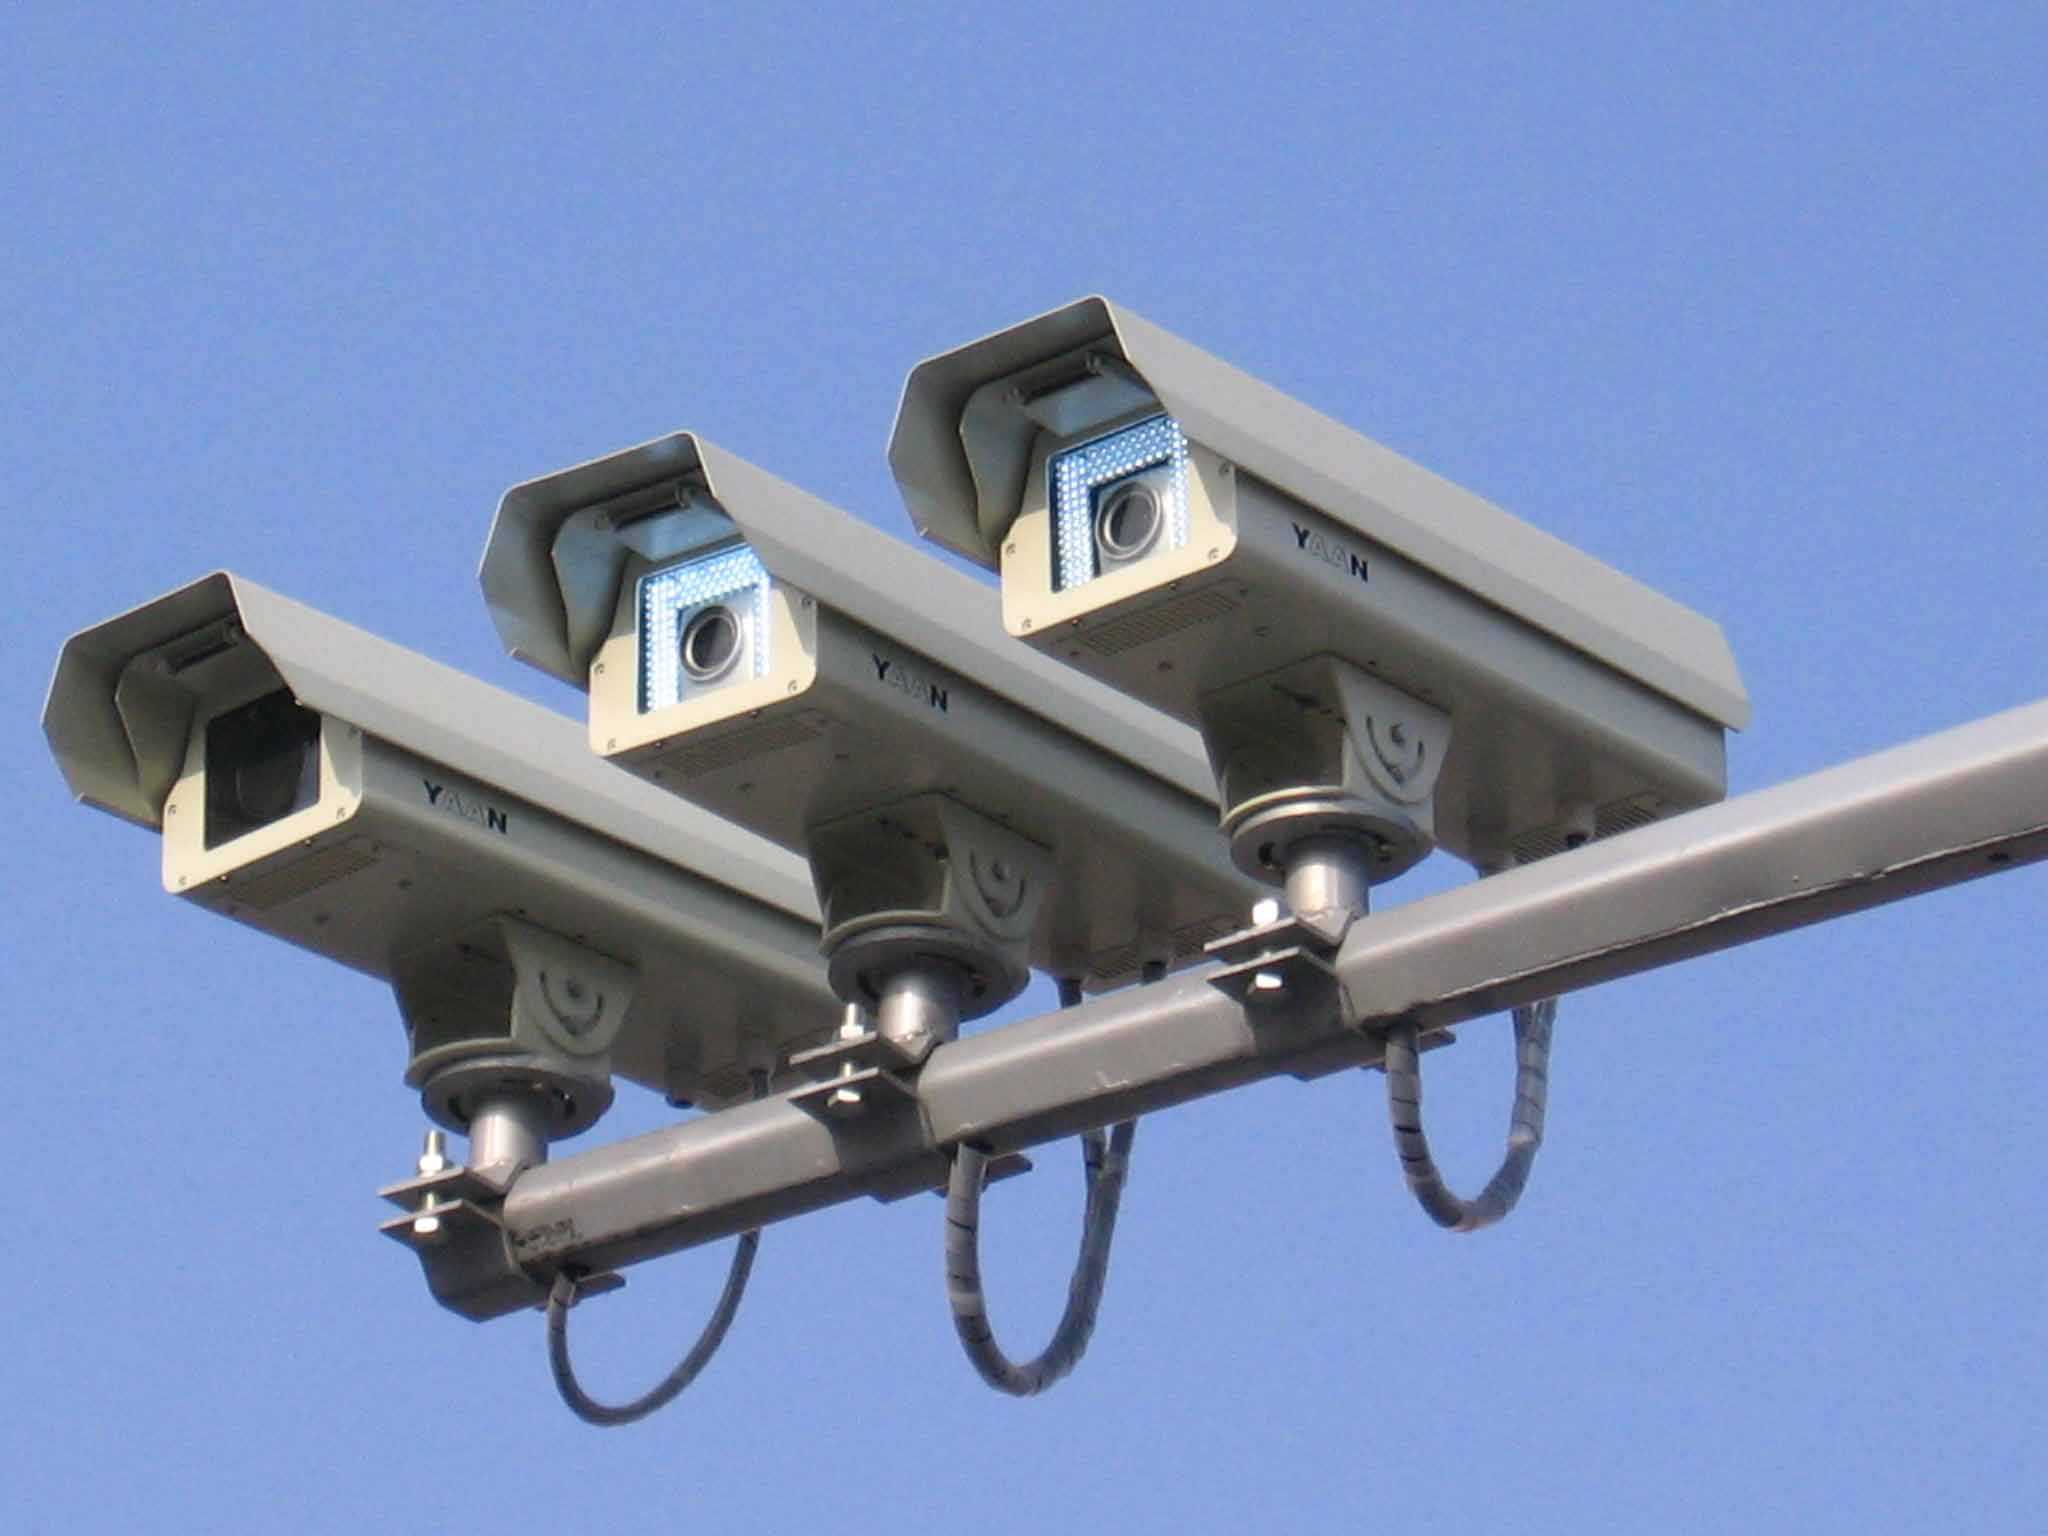 IDC predicts China to have 2.76 billion surveillance cameras by 2022